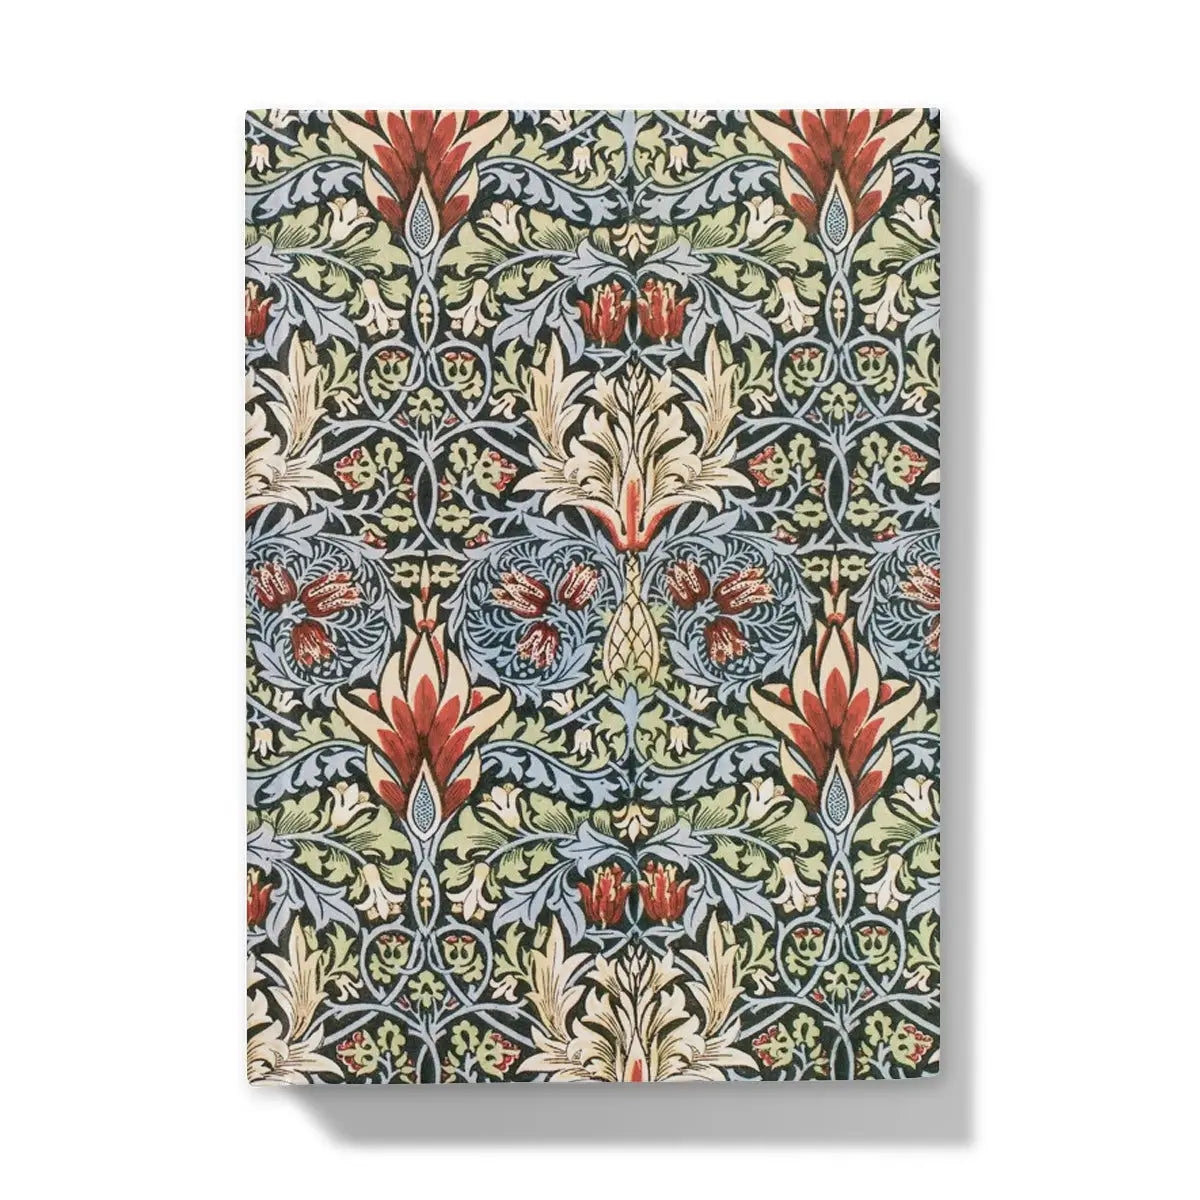 Snakeshead - William Morris Hardback Journal - 5’x7’ / 5’ x 7’ - Lined Paper - Notebooks & Notepads - Aesthetic Art